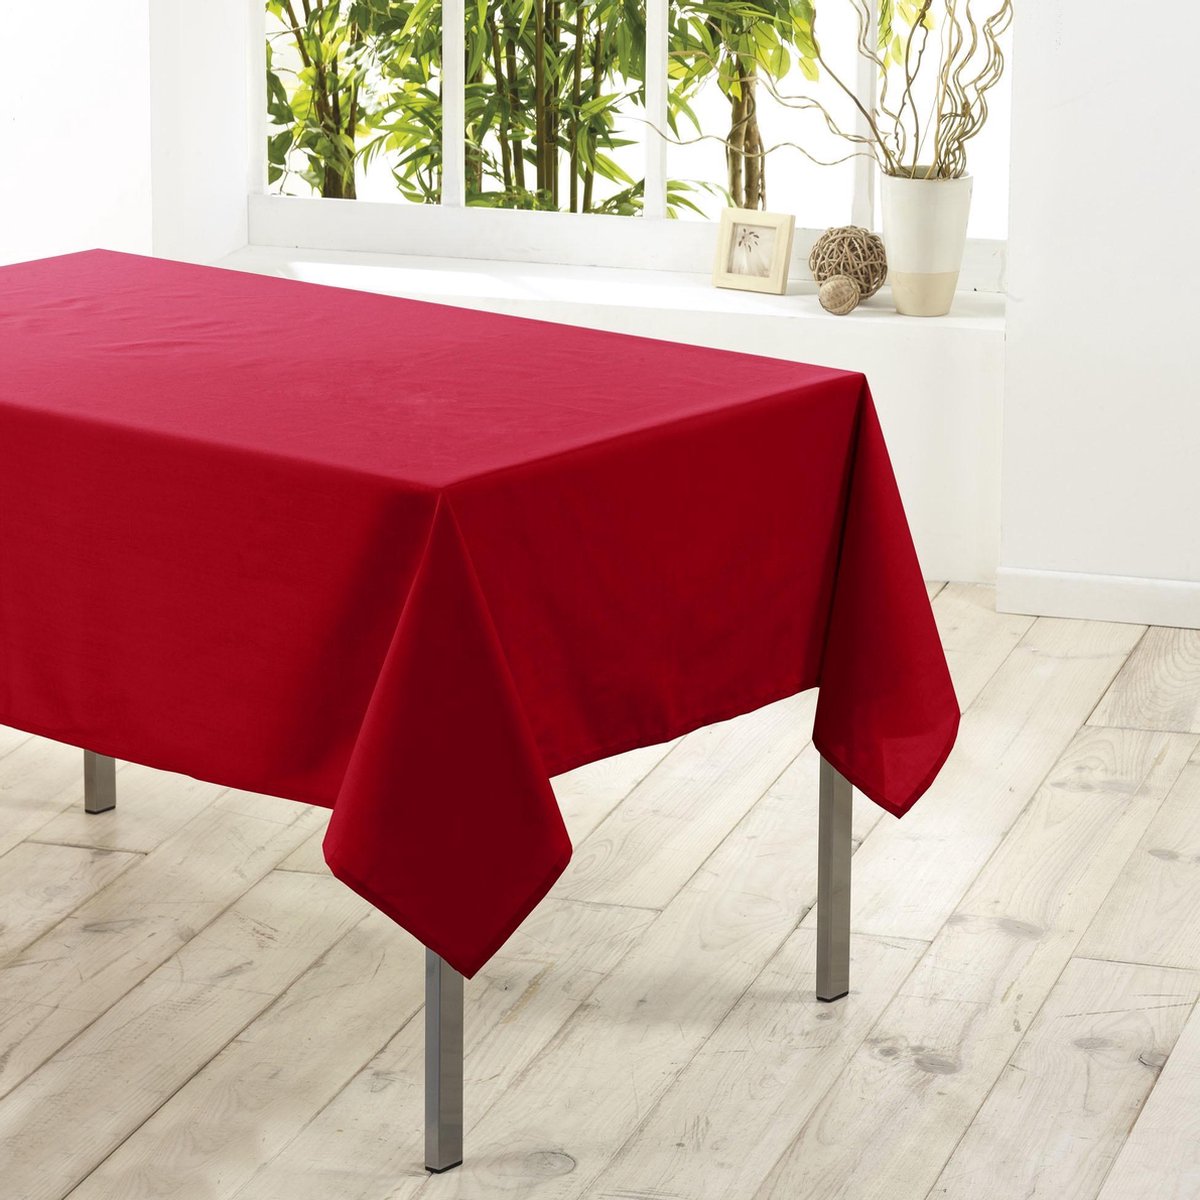 Tafellaken-Tafelkleed- Essentiel rood 140x250cm - Merkloos